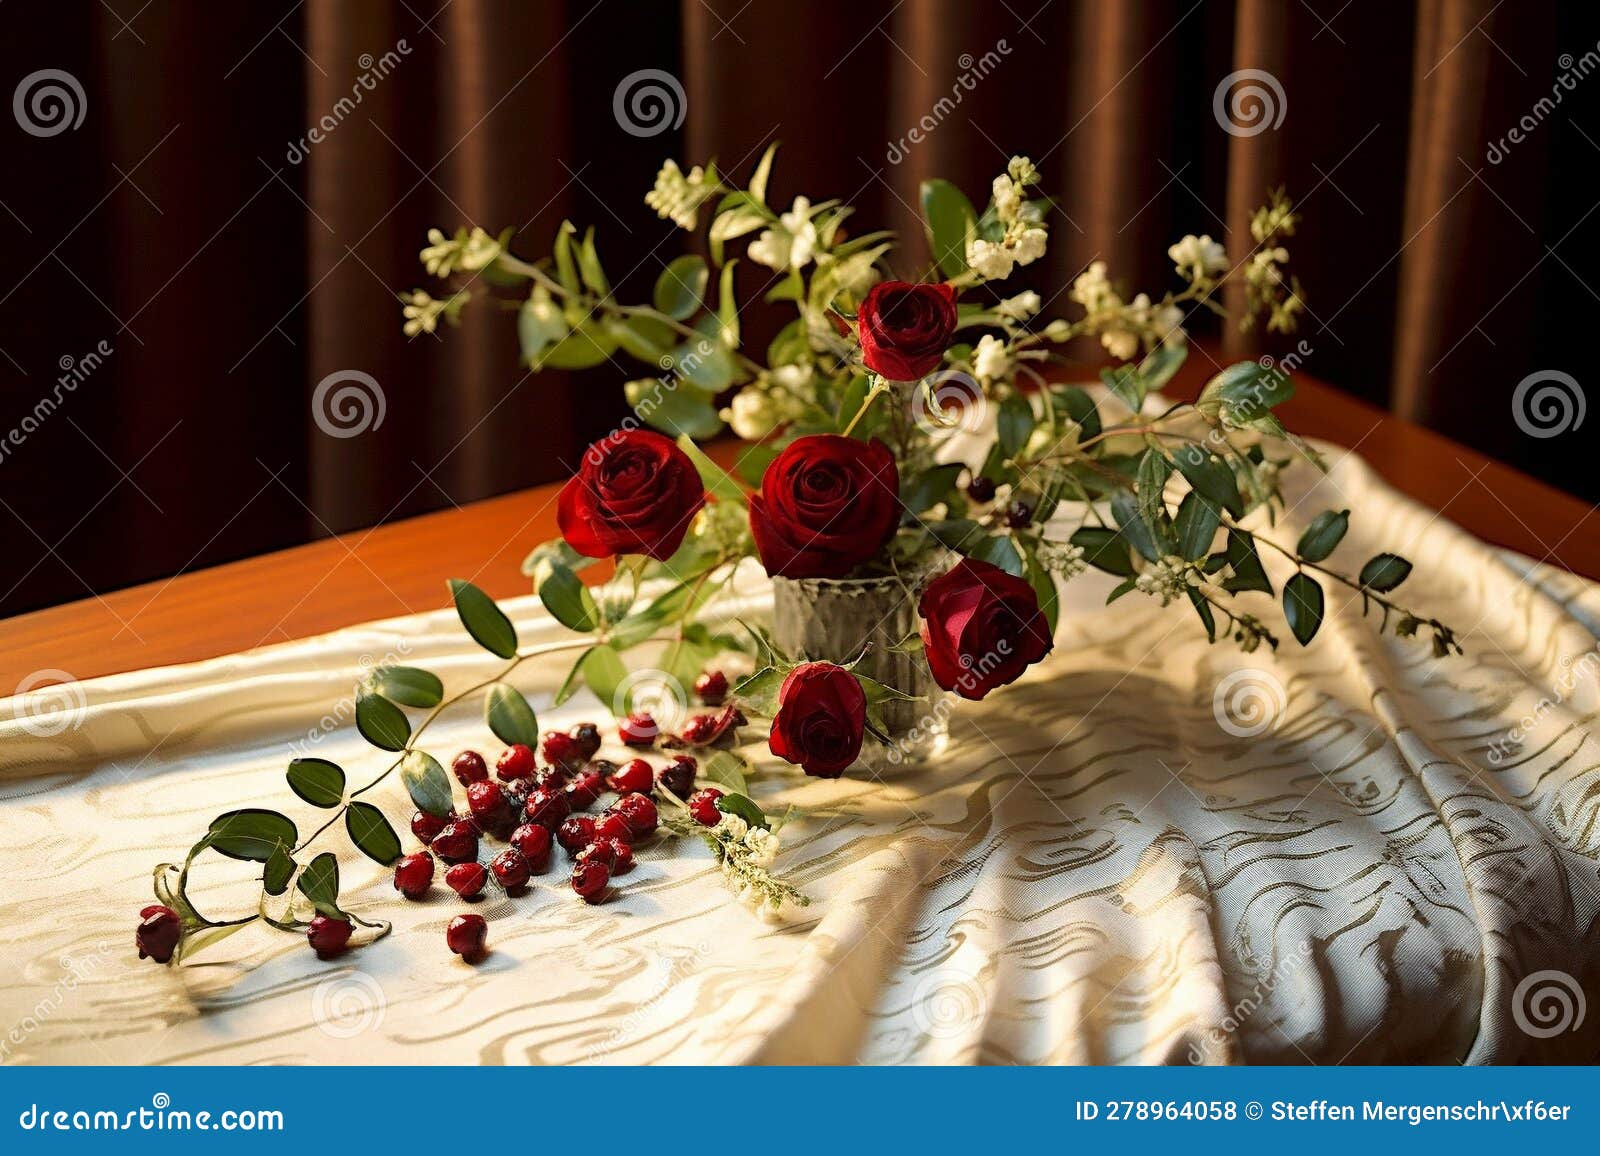 elegant floral centerpiece on velvet tablecloth